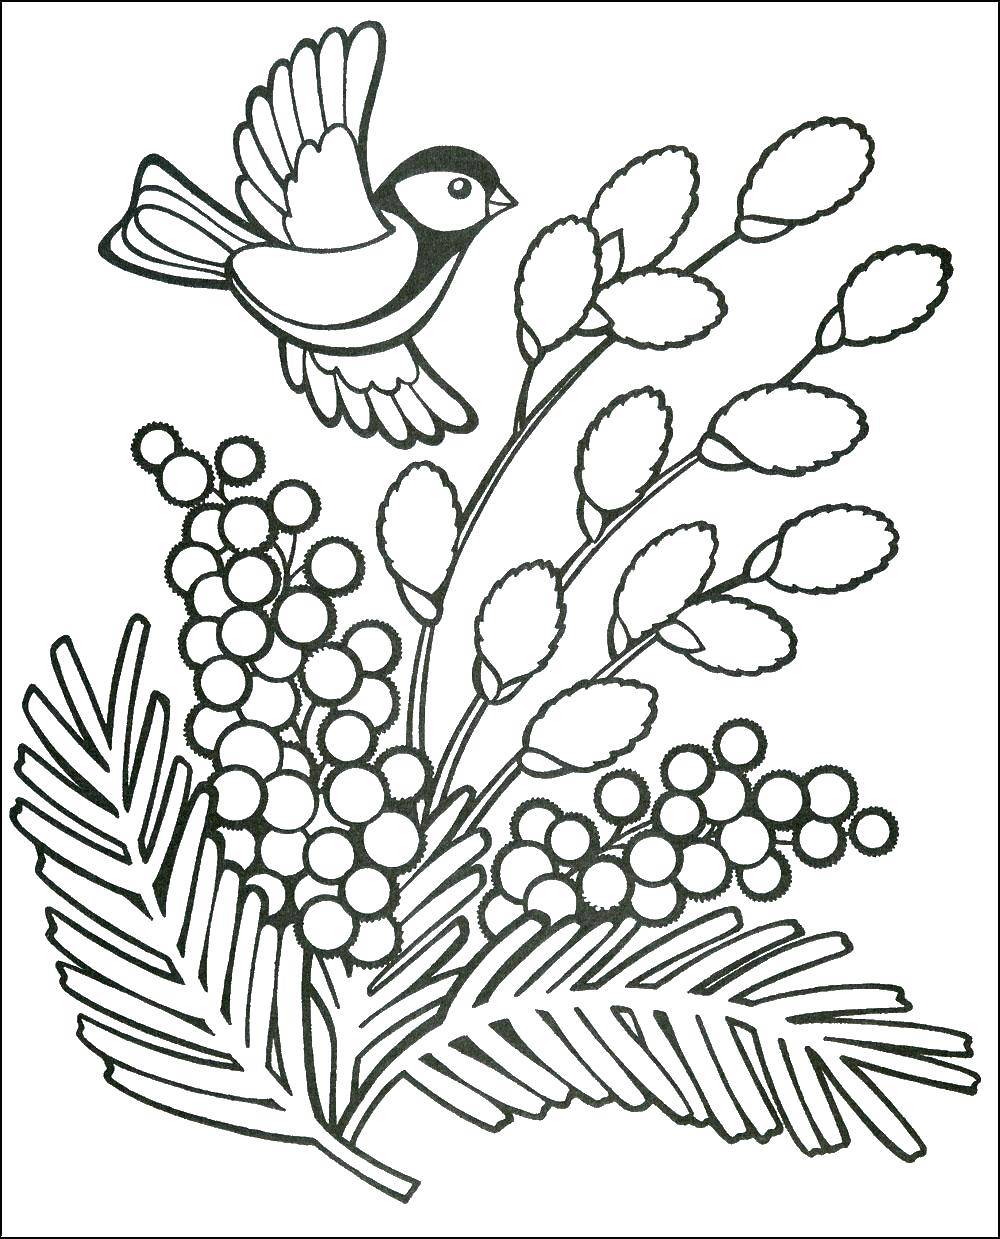 Coloring Bullfinch with a Rowan. Category spring. Tags:  bullfinch, Rowan.